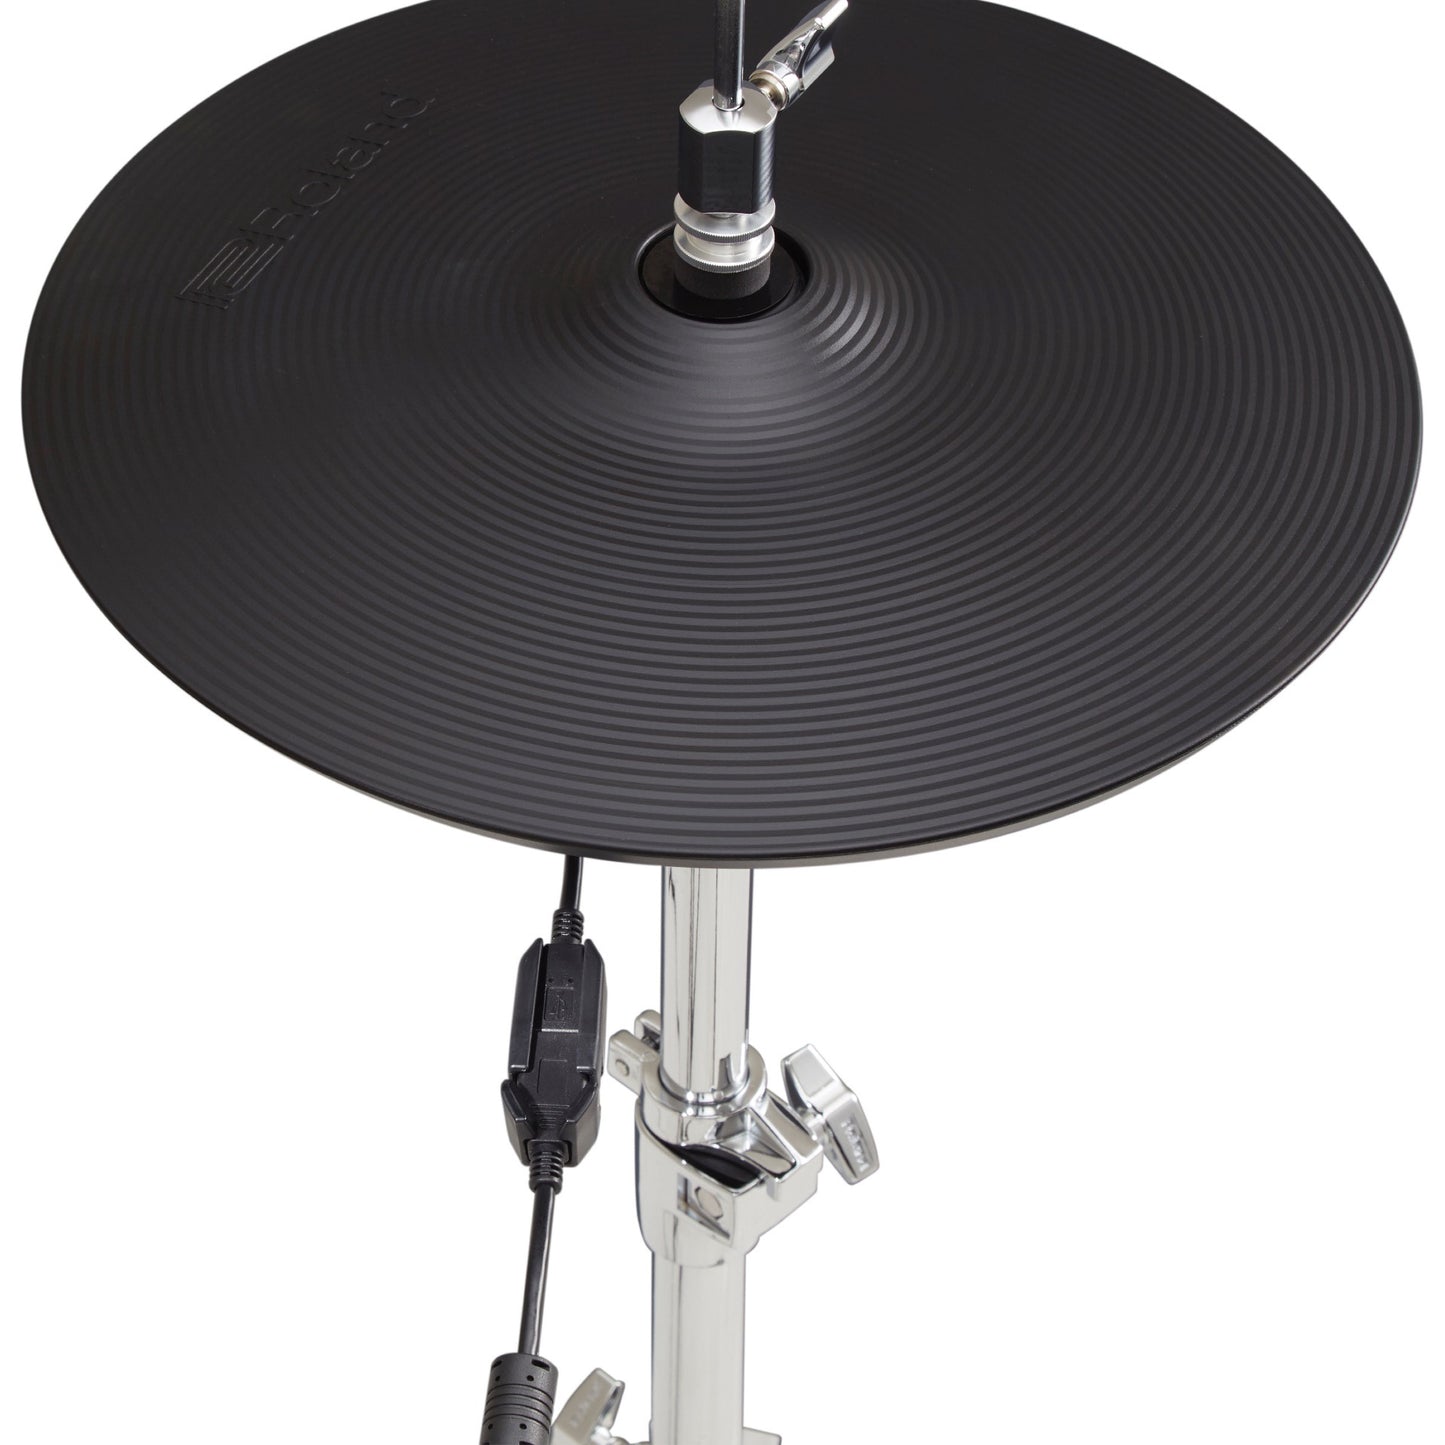 Roland V-Drums VH-14D Digital Hi-Hat Cymbal Pad